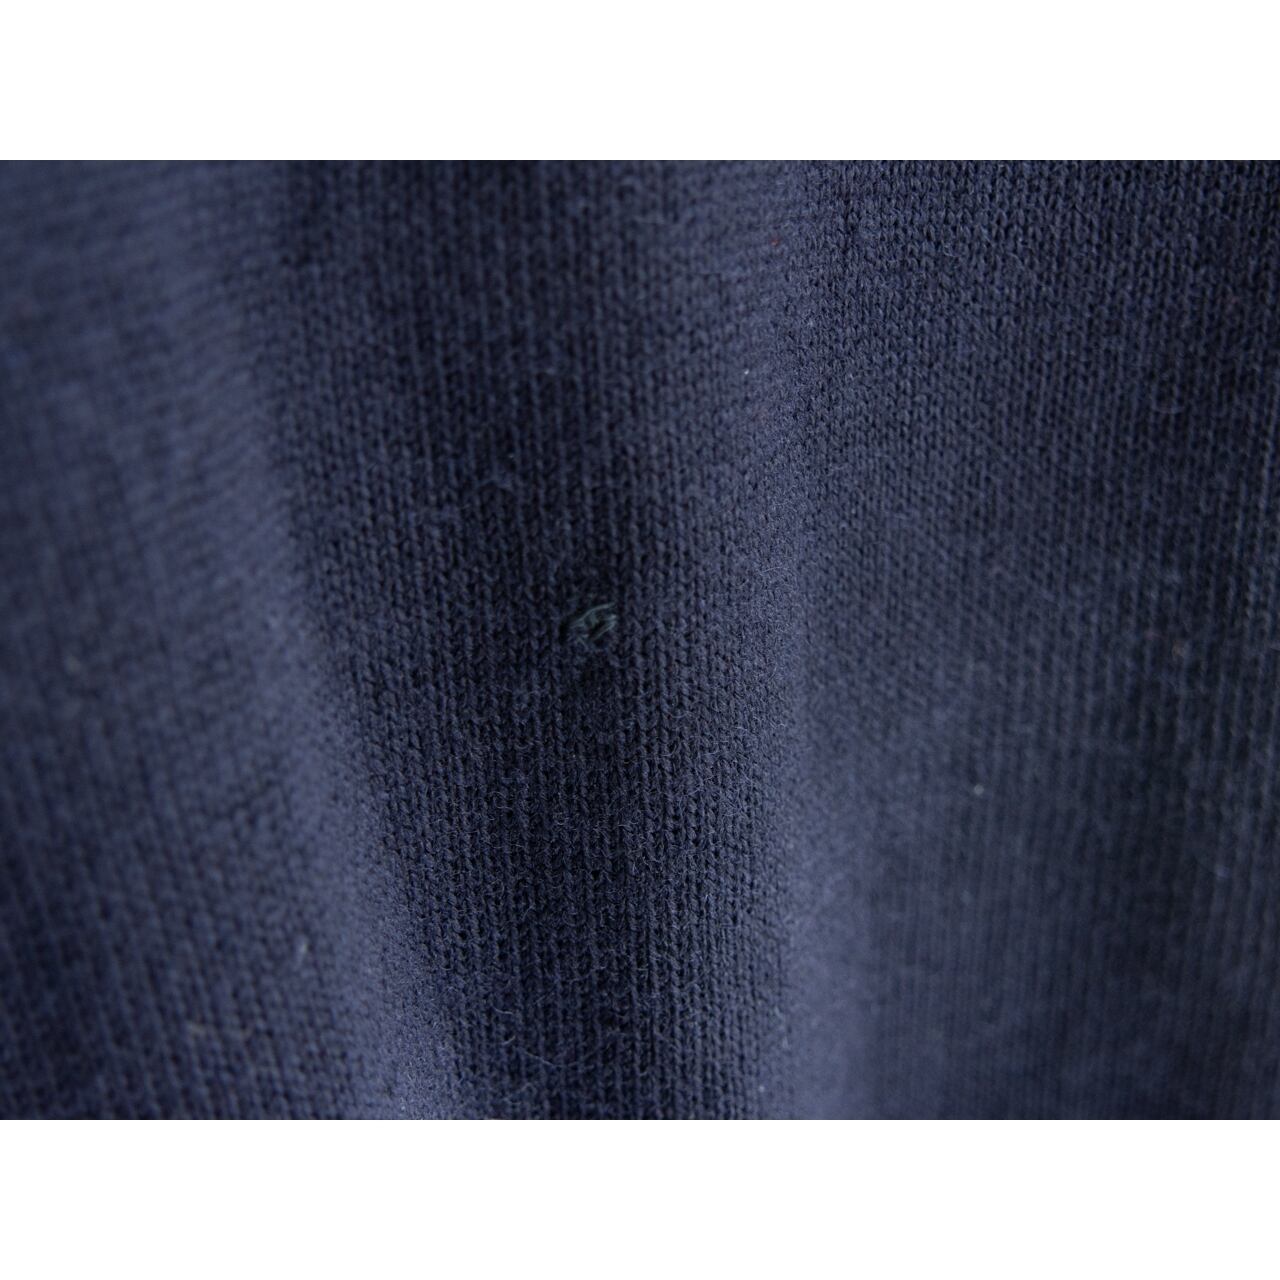 【FILA】Made in Italy 70-80's 100% Wool Pullover Sweater（フィラ イタリア製 プルオーバーウールセーター クルーネックニット）